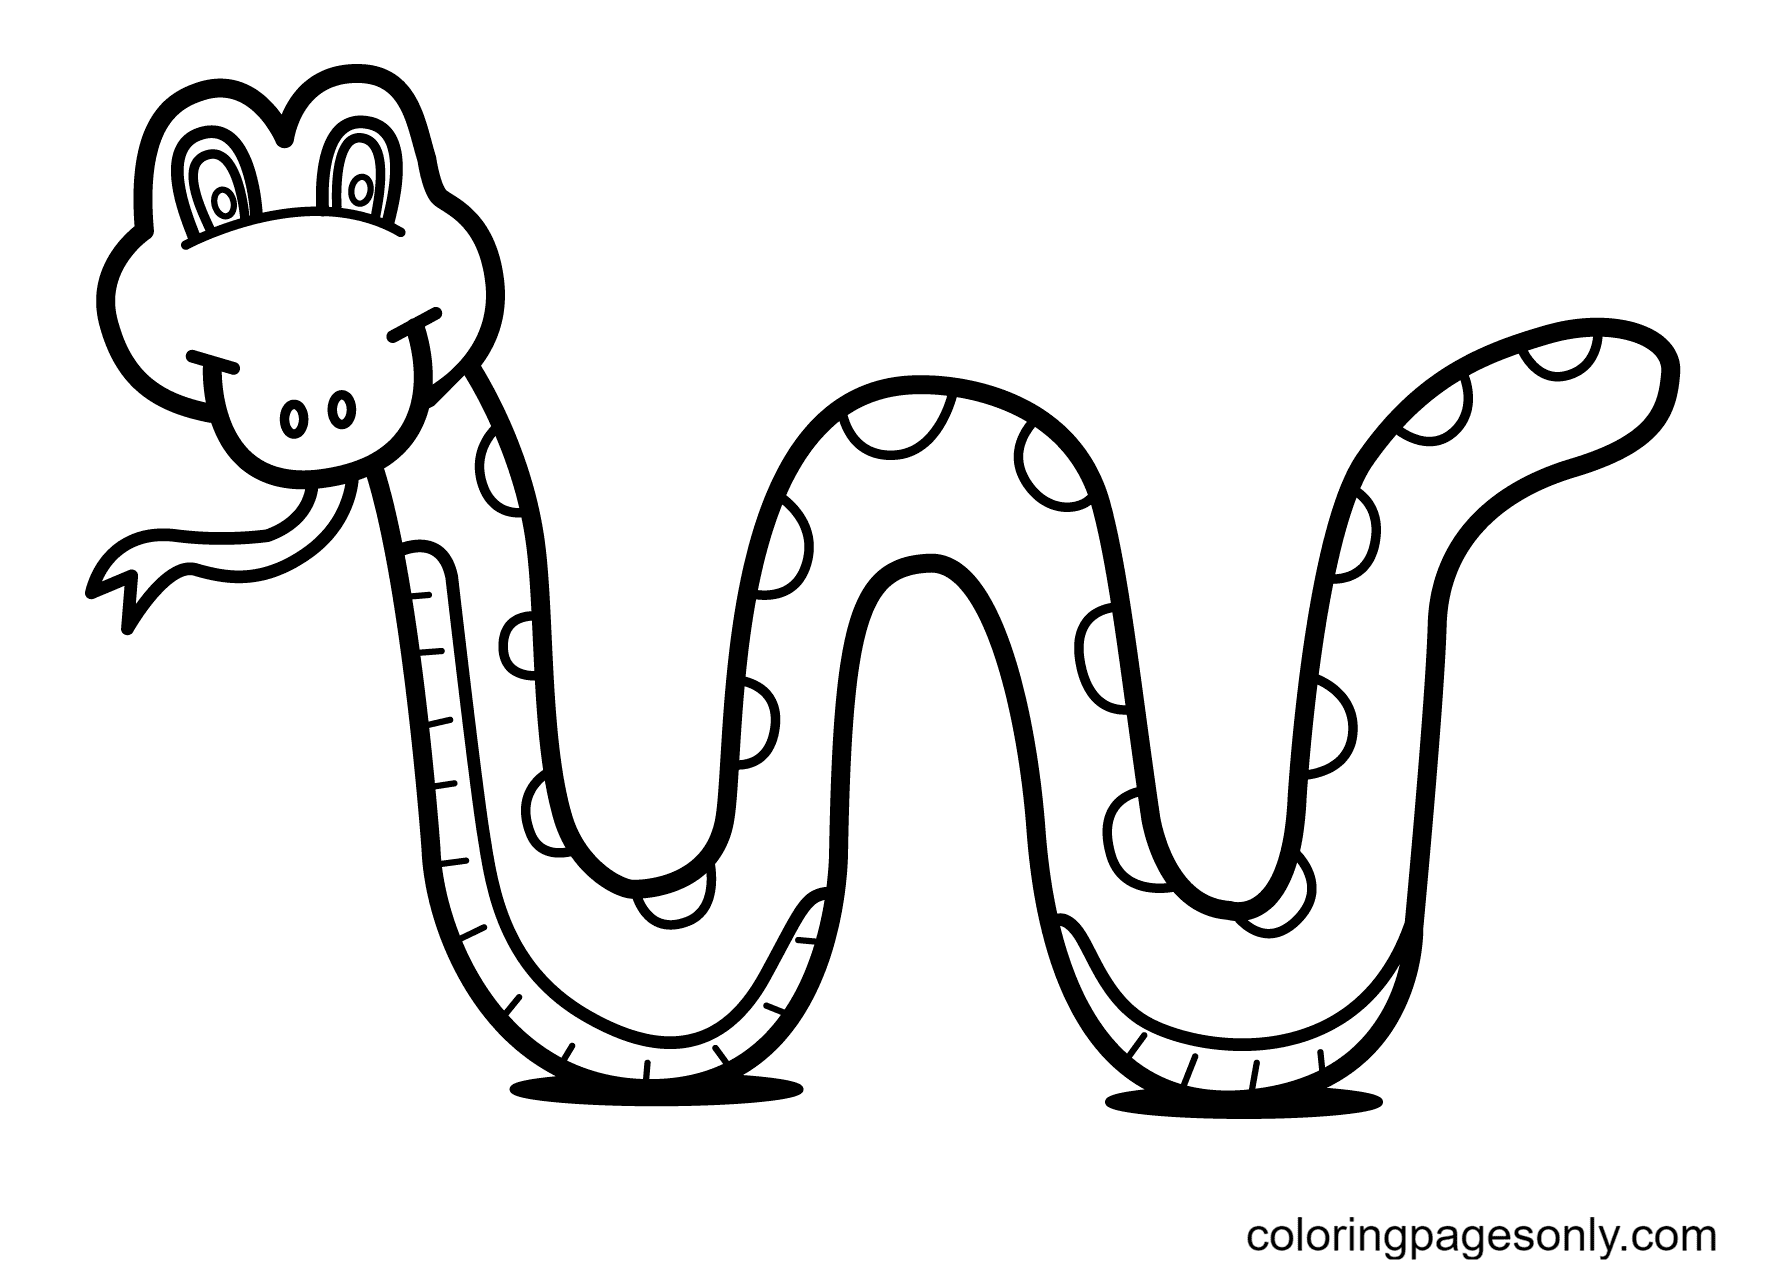 Free Printable Snake Coloring Page